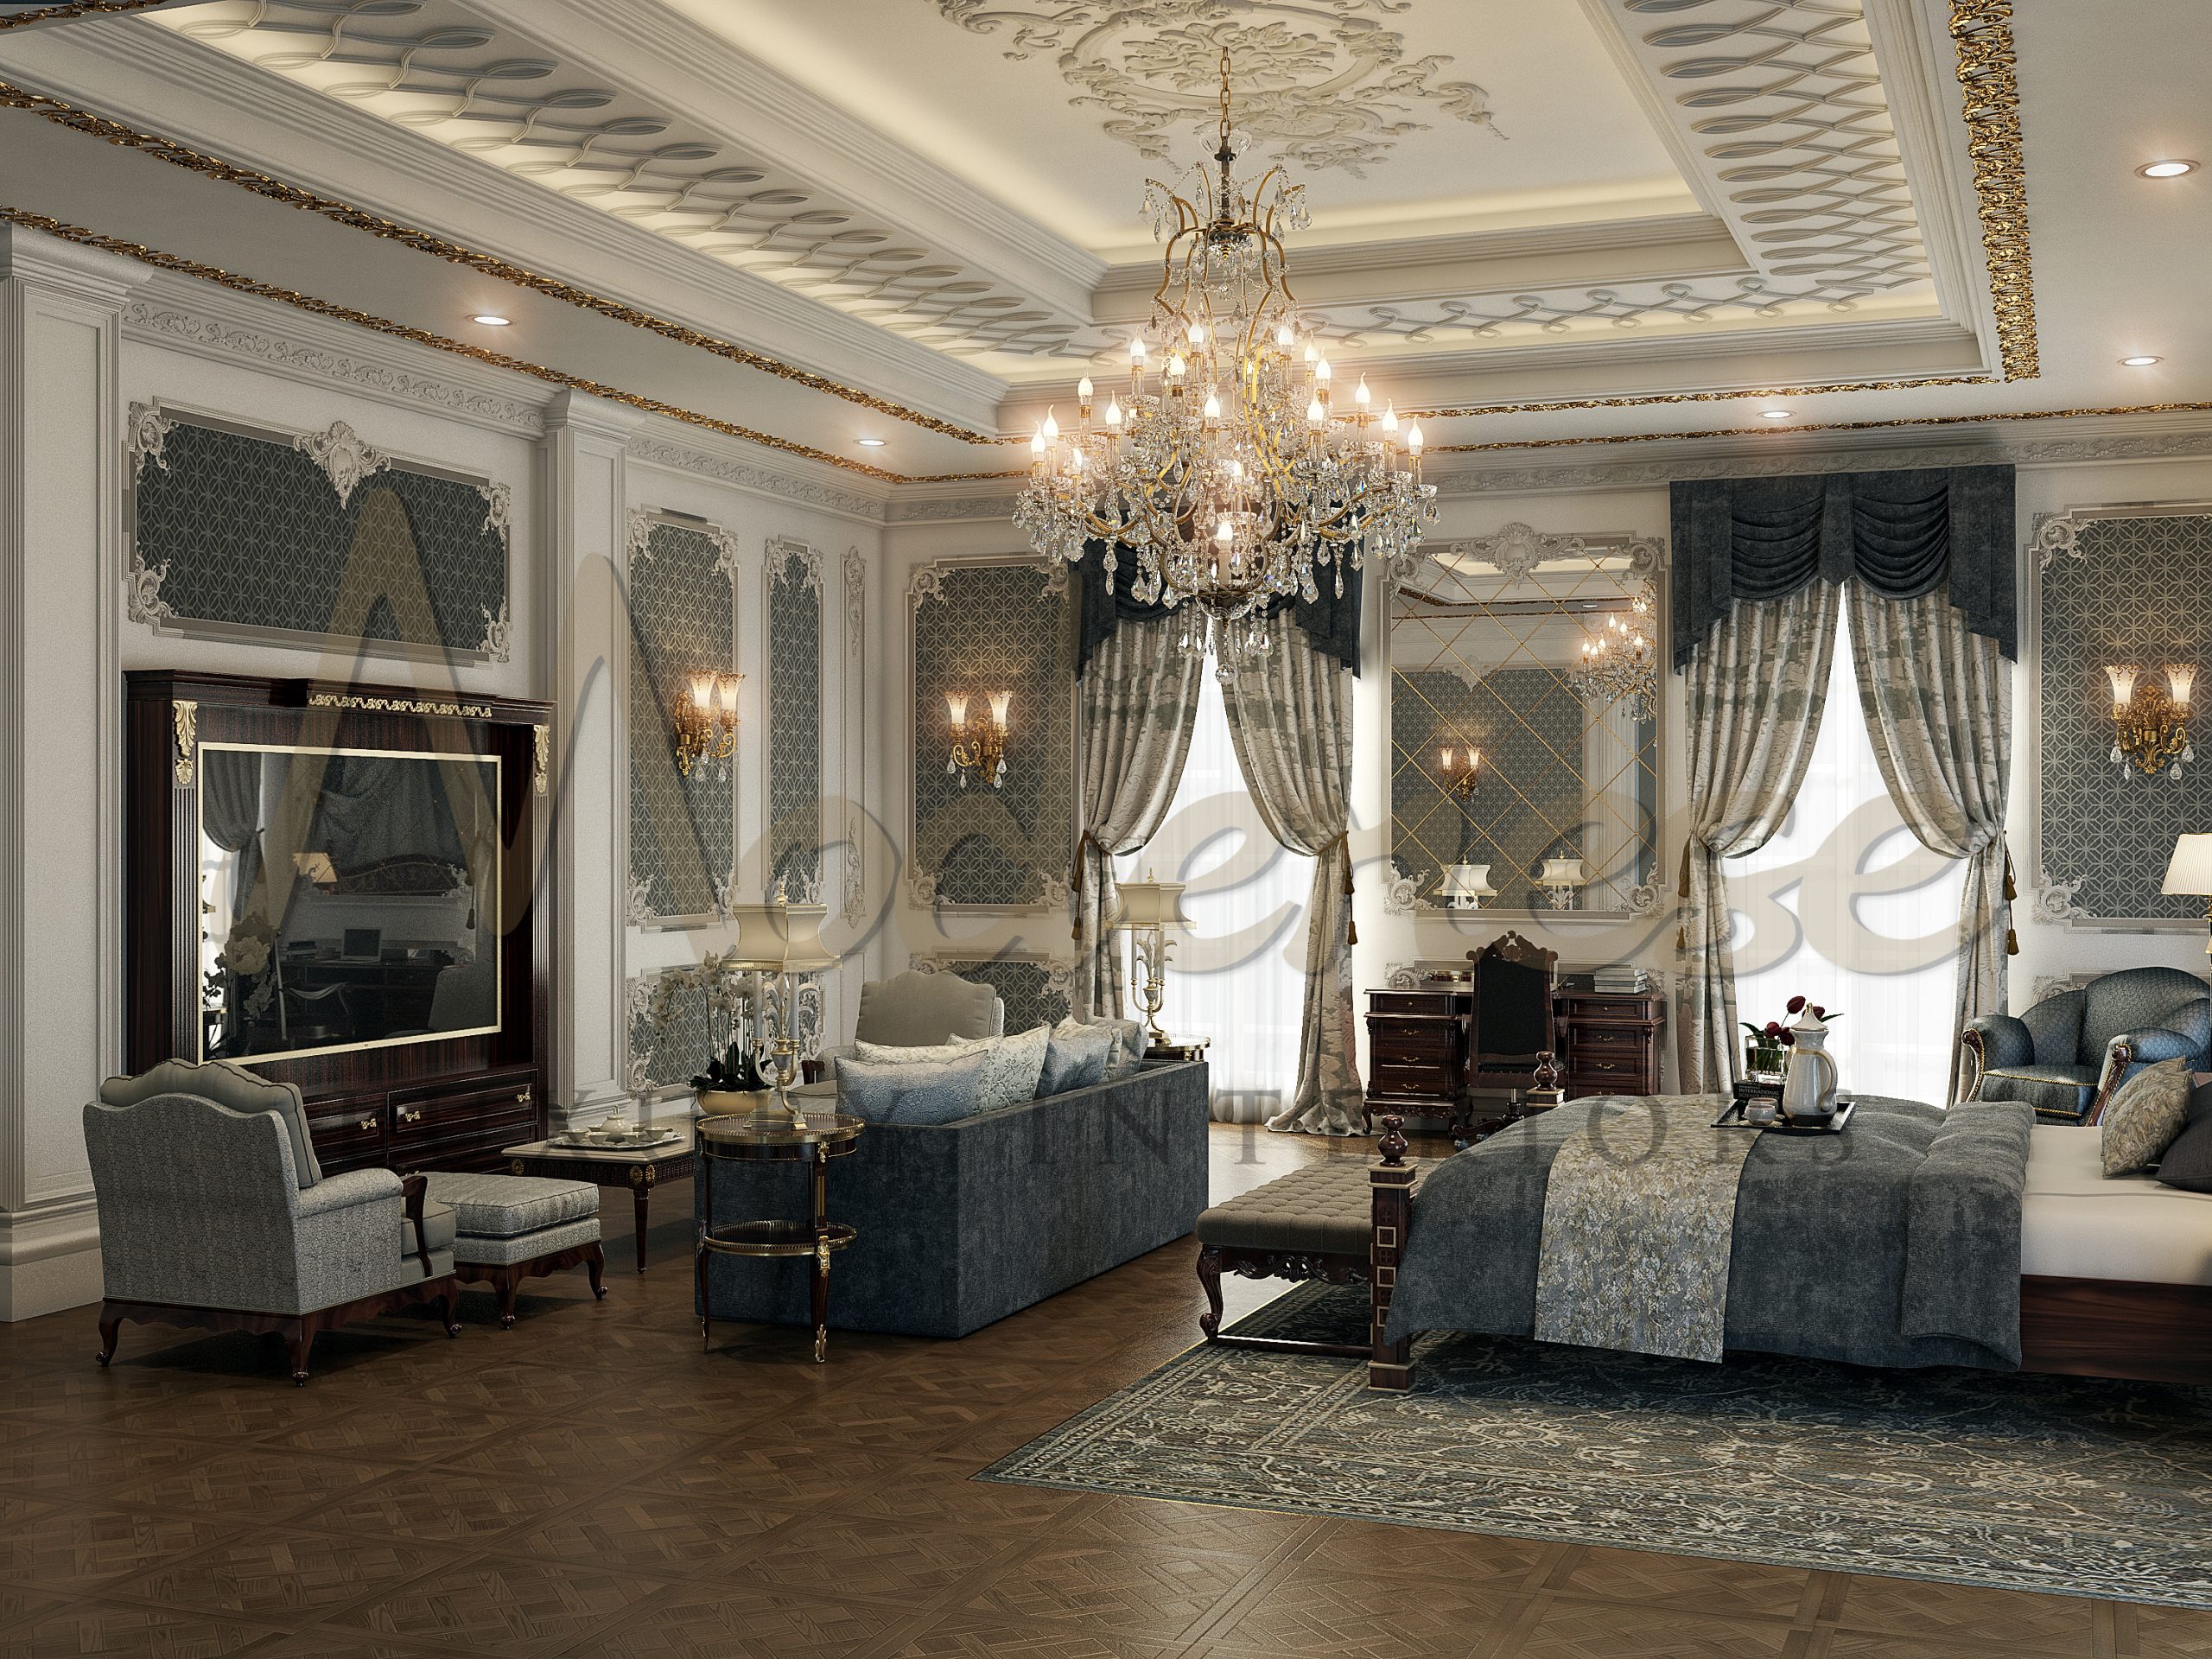 Exclusive home interior design idea for bedroom. Bespoke interiors for the most amazing villa design.